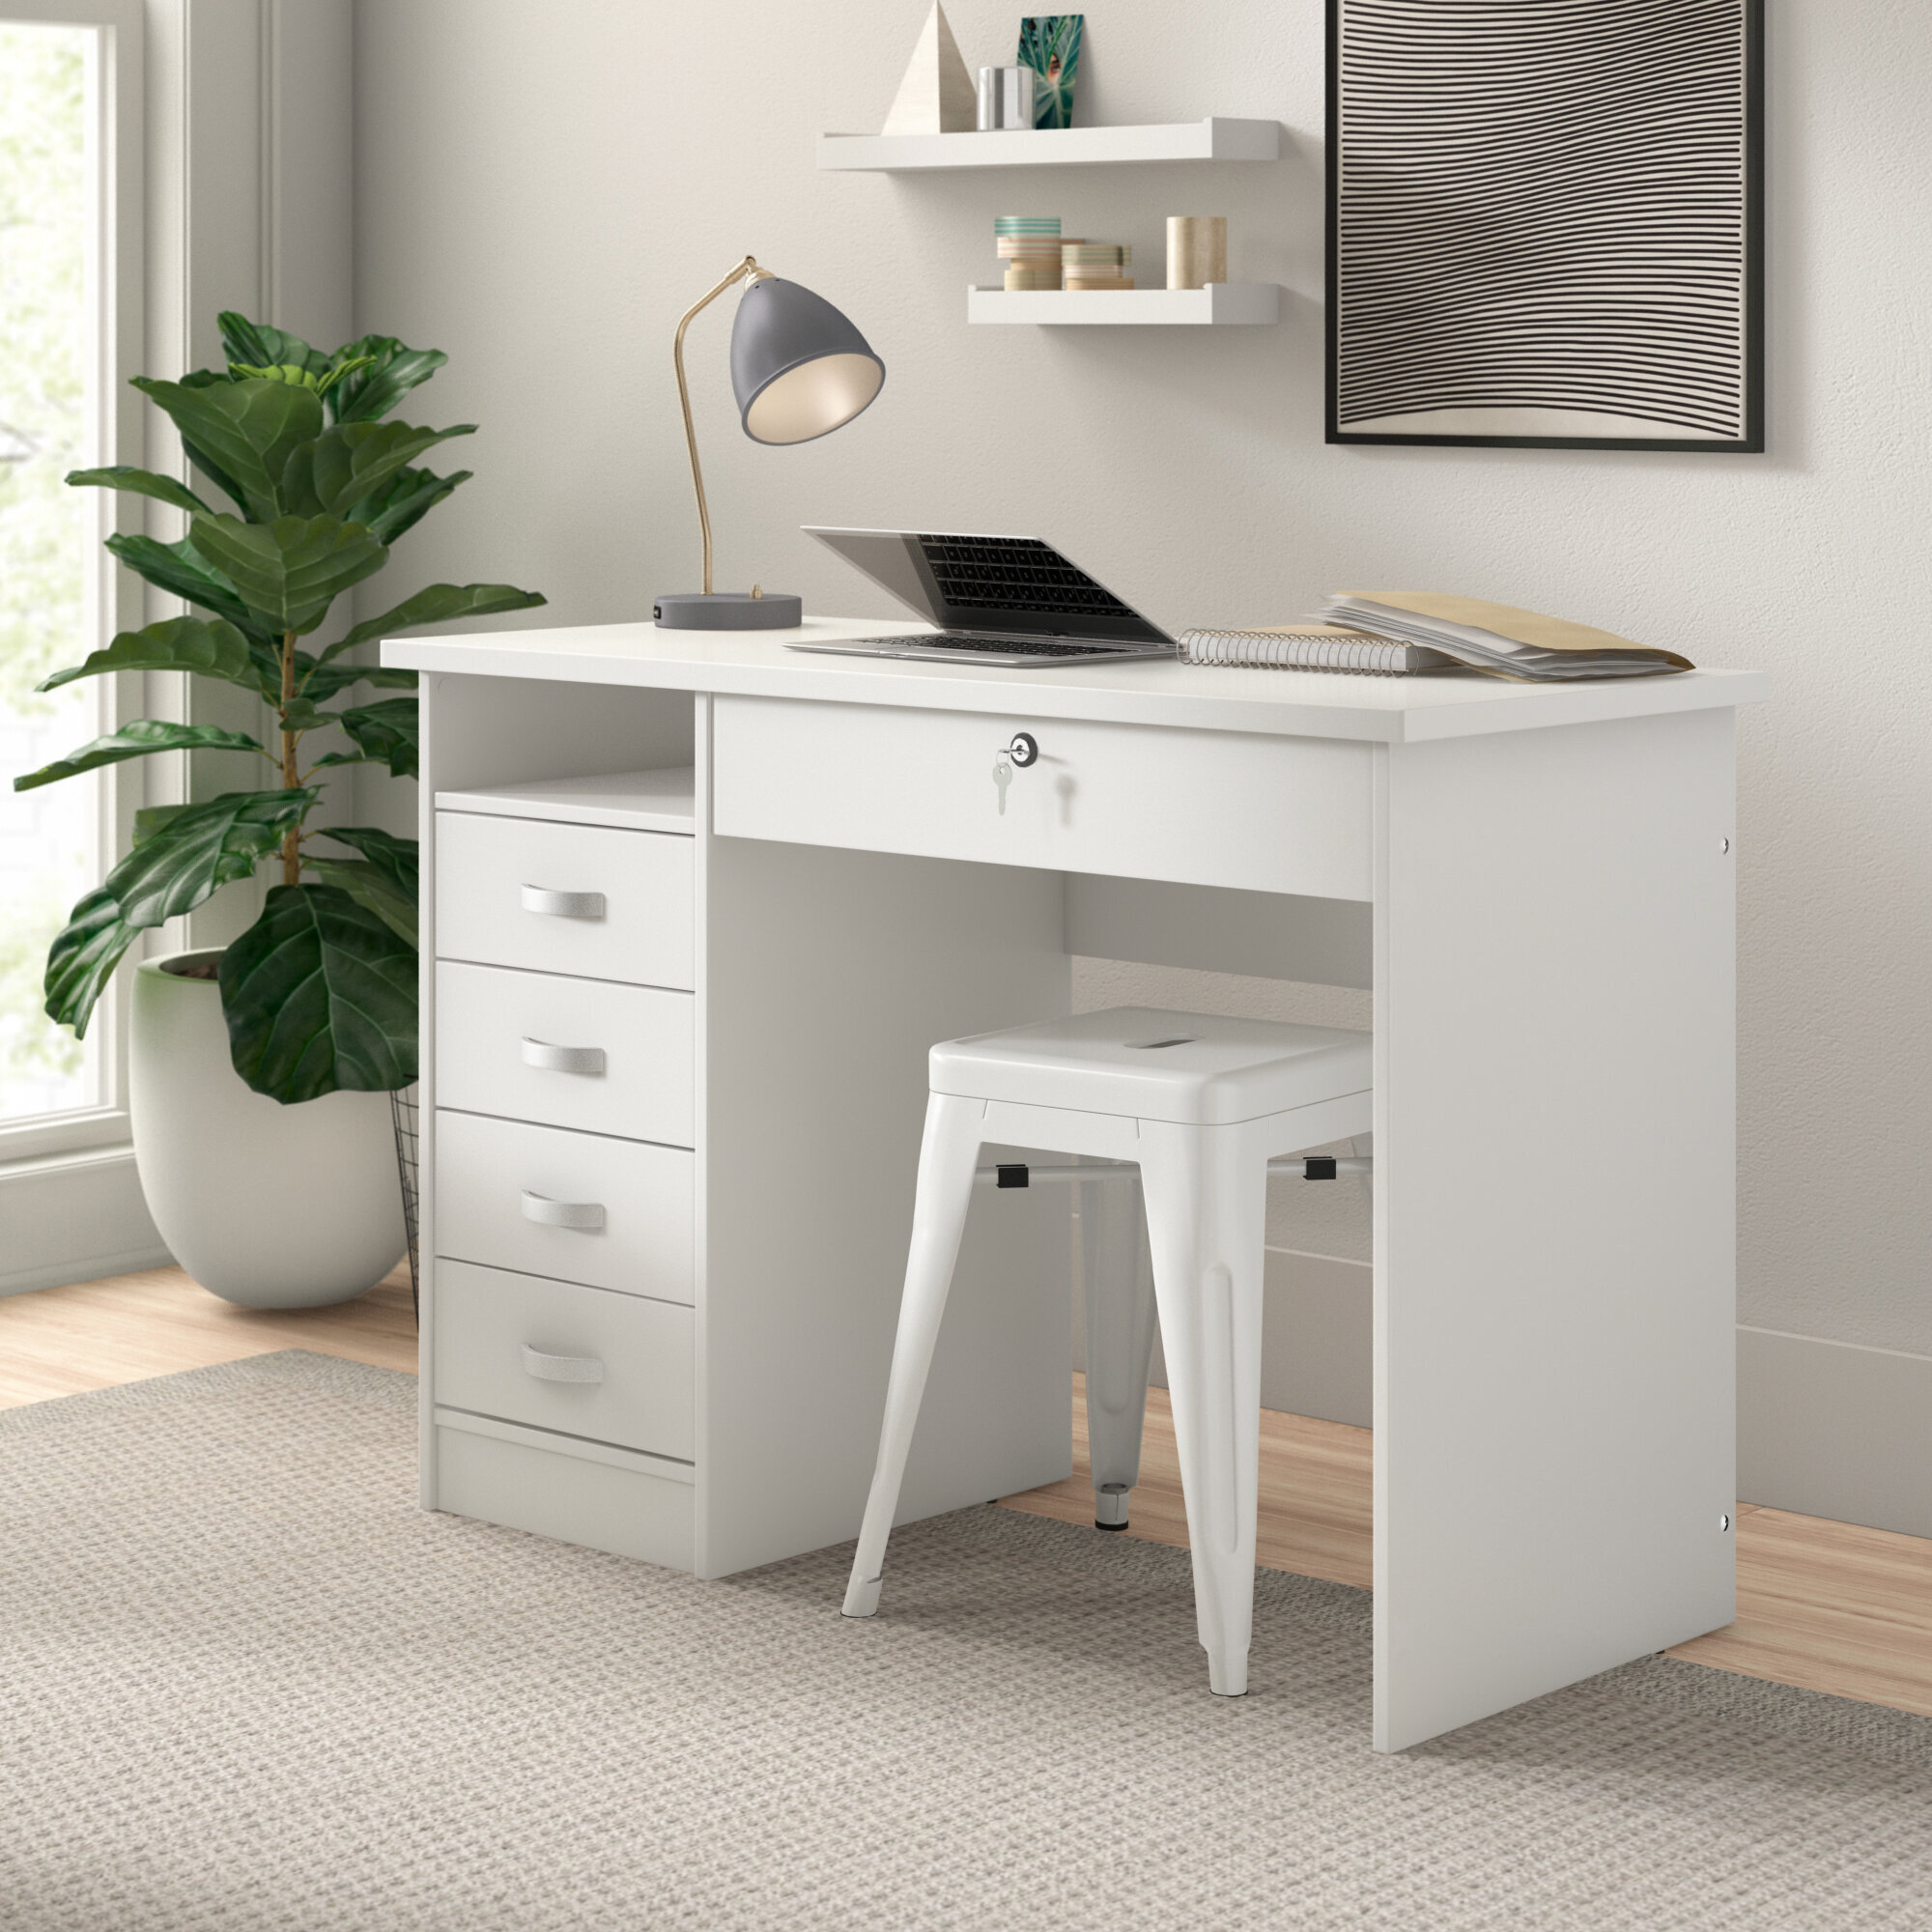 White & Chrome X-Shaped Legs Rectangular With 2 Drawers 42" x 19" x 31"H Desk 